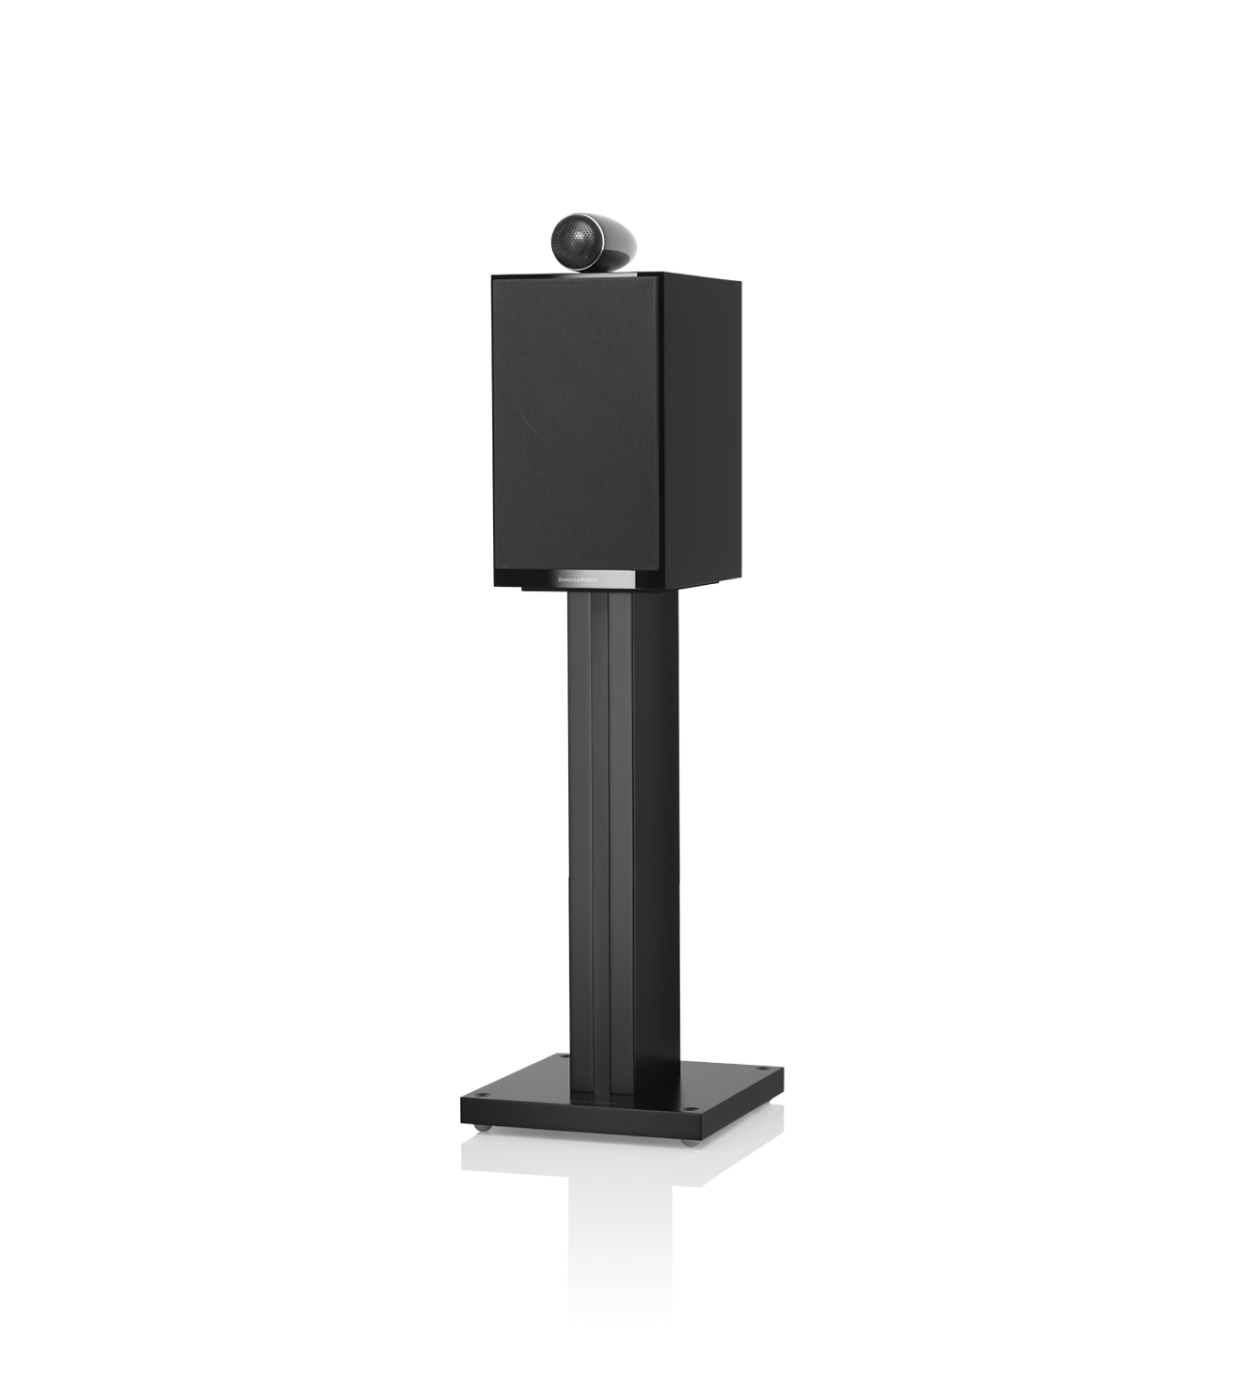 705 S2 (Recertified) Stand-mount Speakers | Bowers & Wilkins